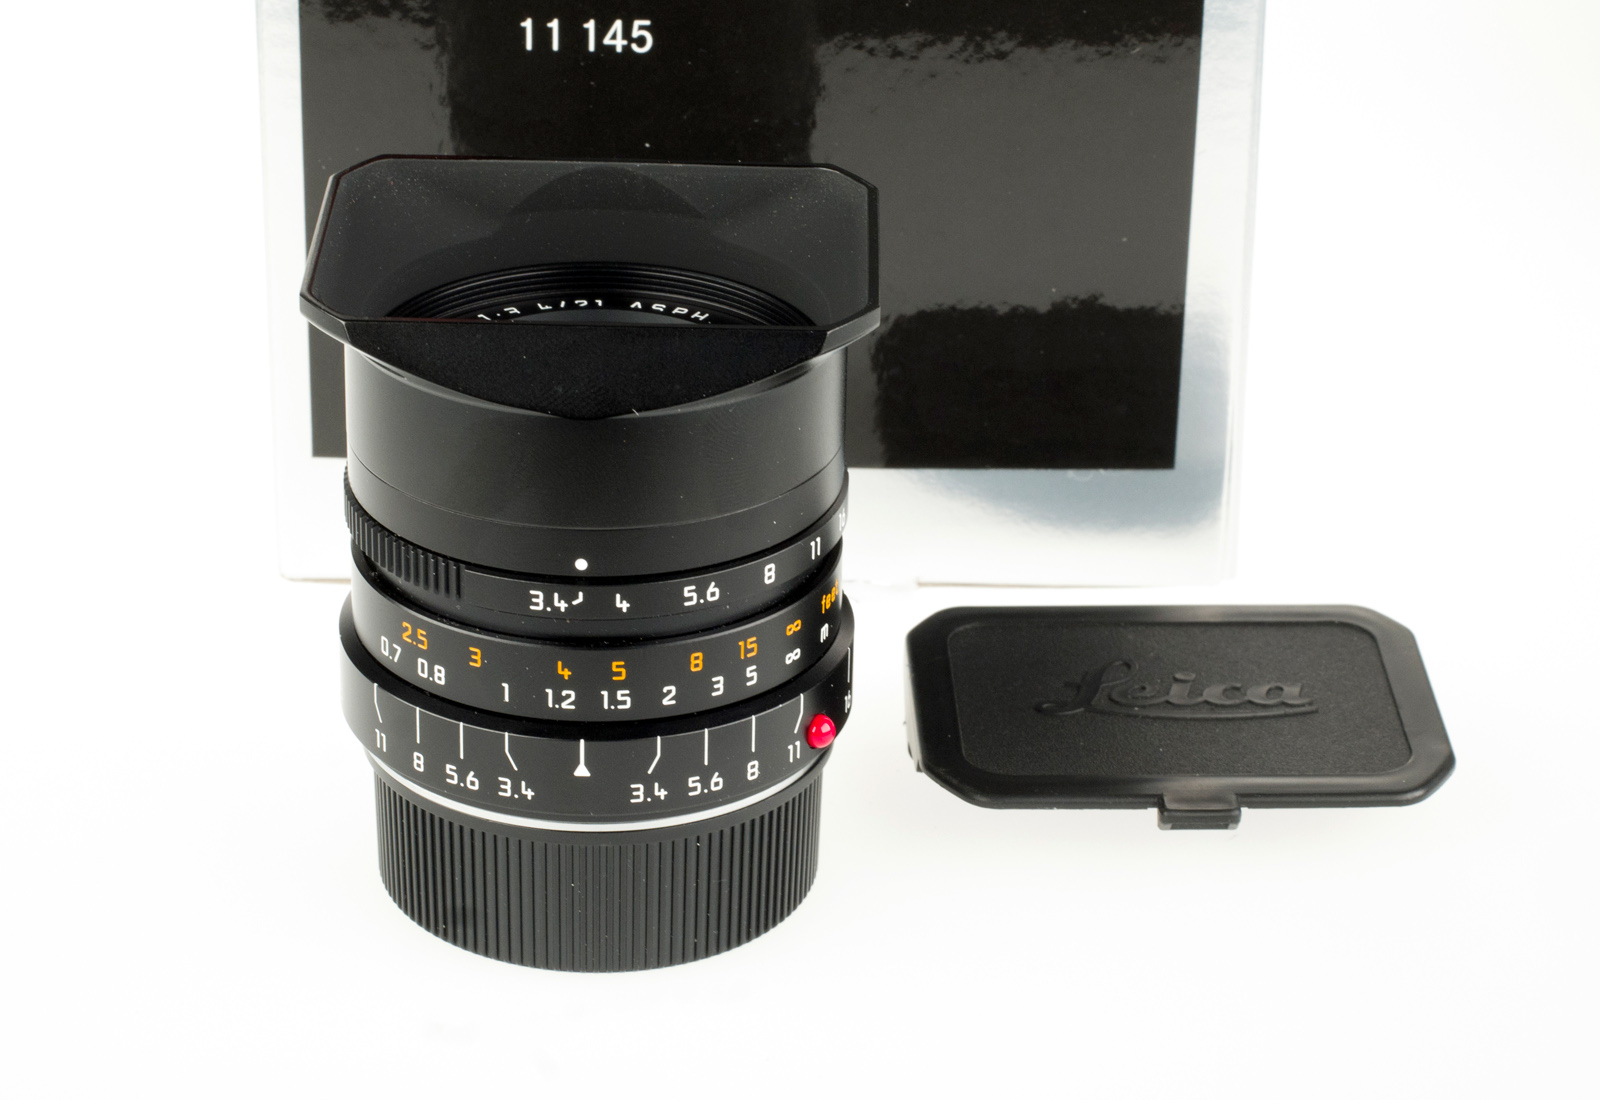 Leica SUPER-ELMAR-M 3.4/21mm ASPH., schwarz 11145